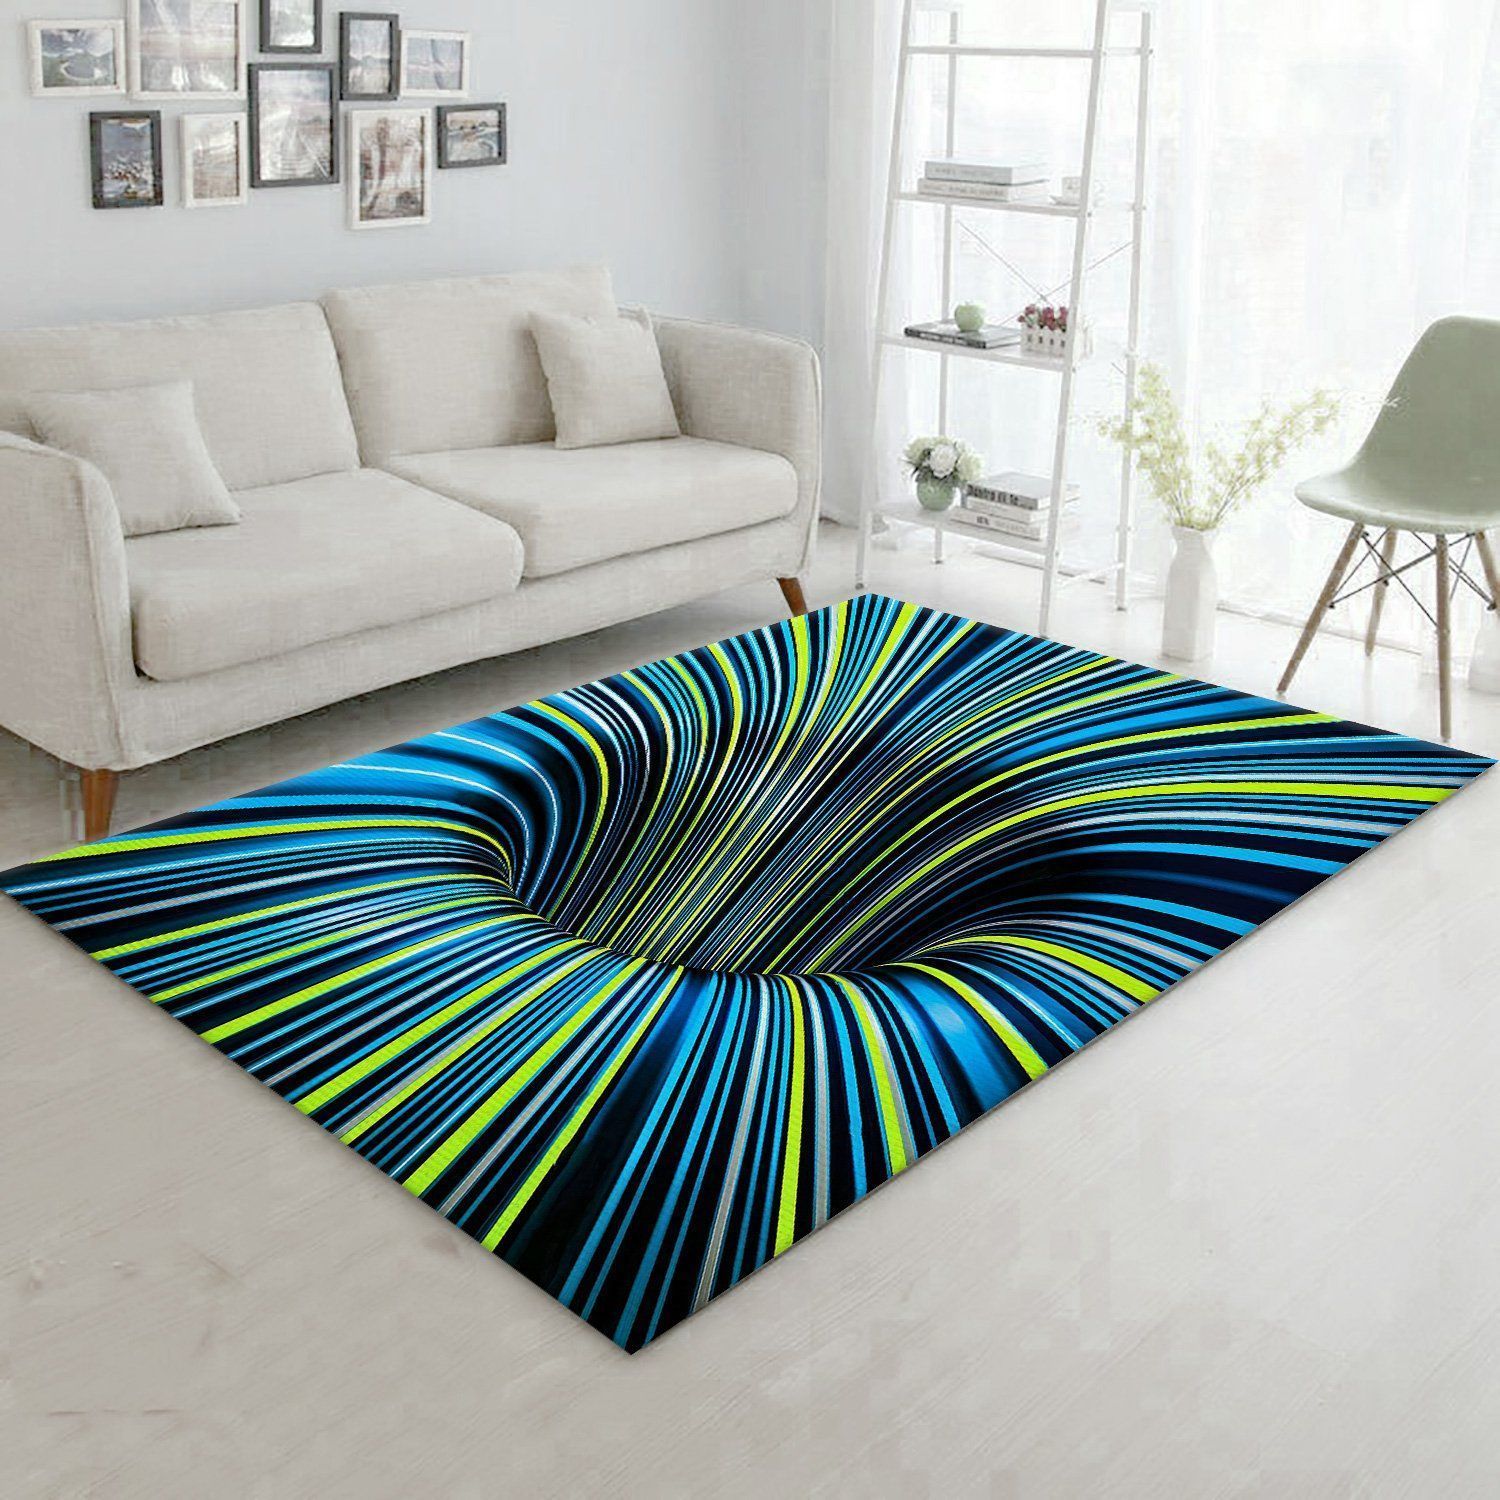 Tunnel Illusion Black Hole Area Rug Carpets Living Room Rugs Floor Decor – Indoor Outdoor Rugs